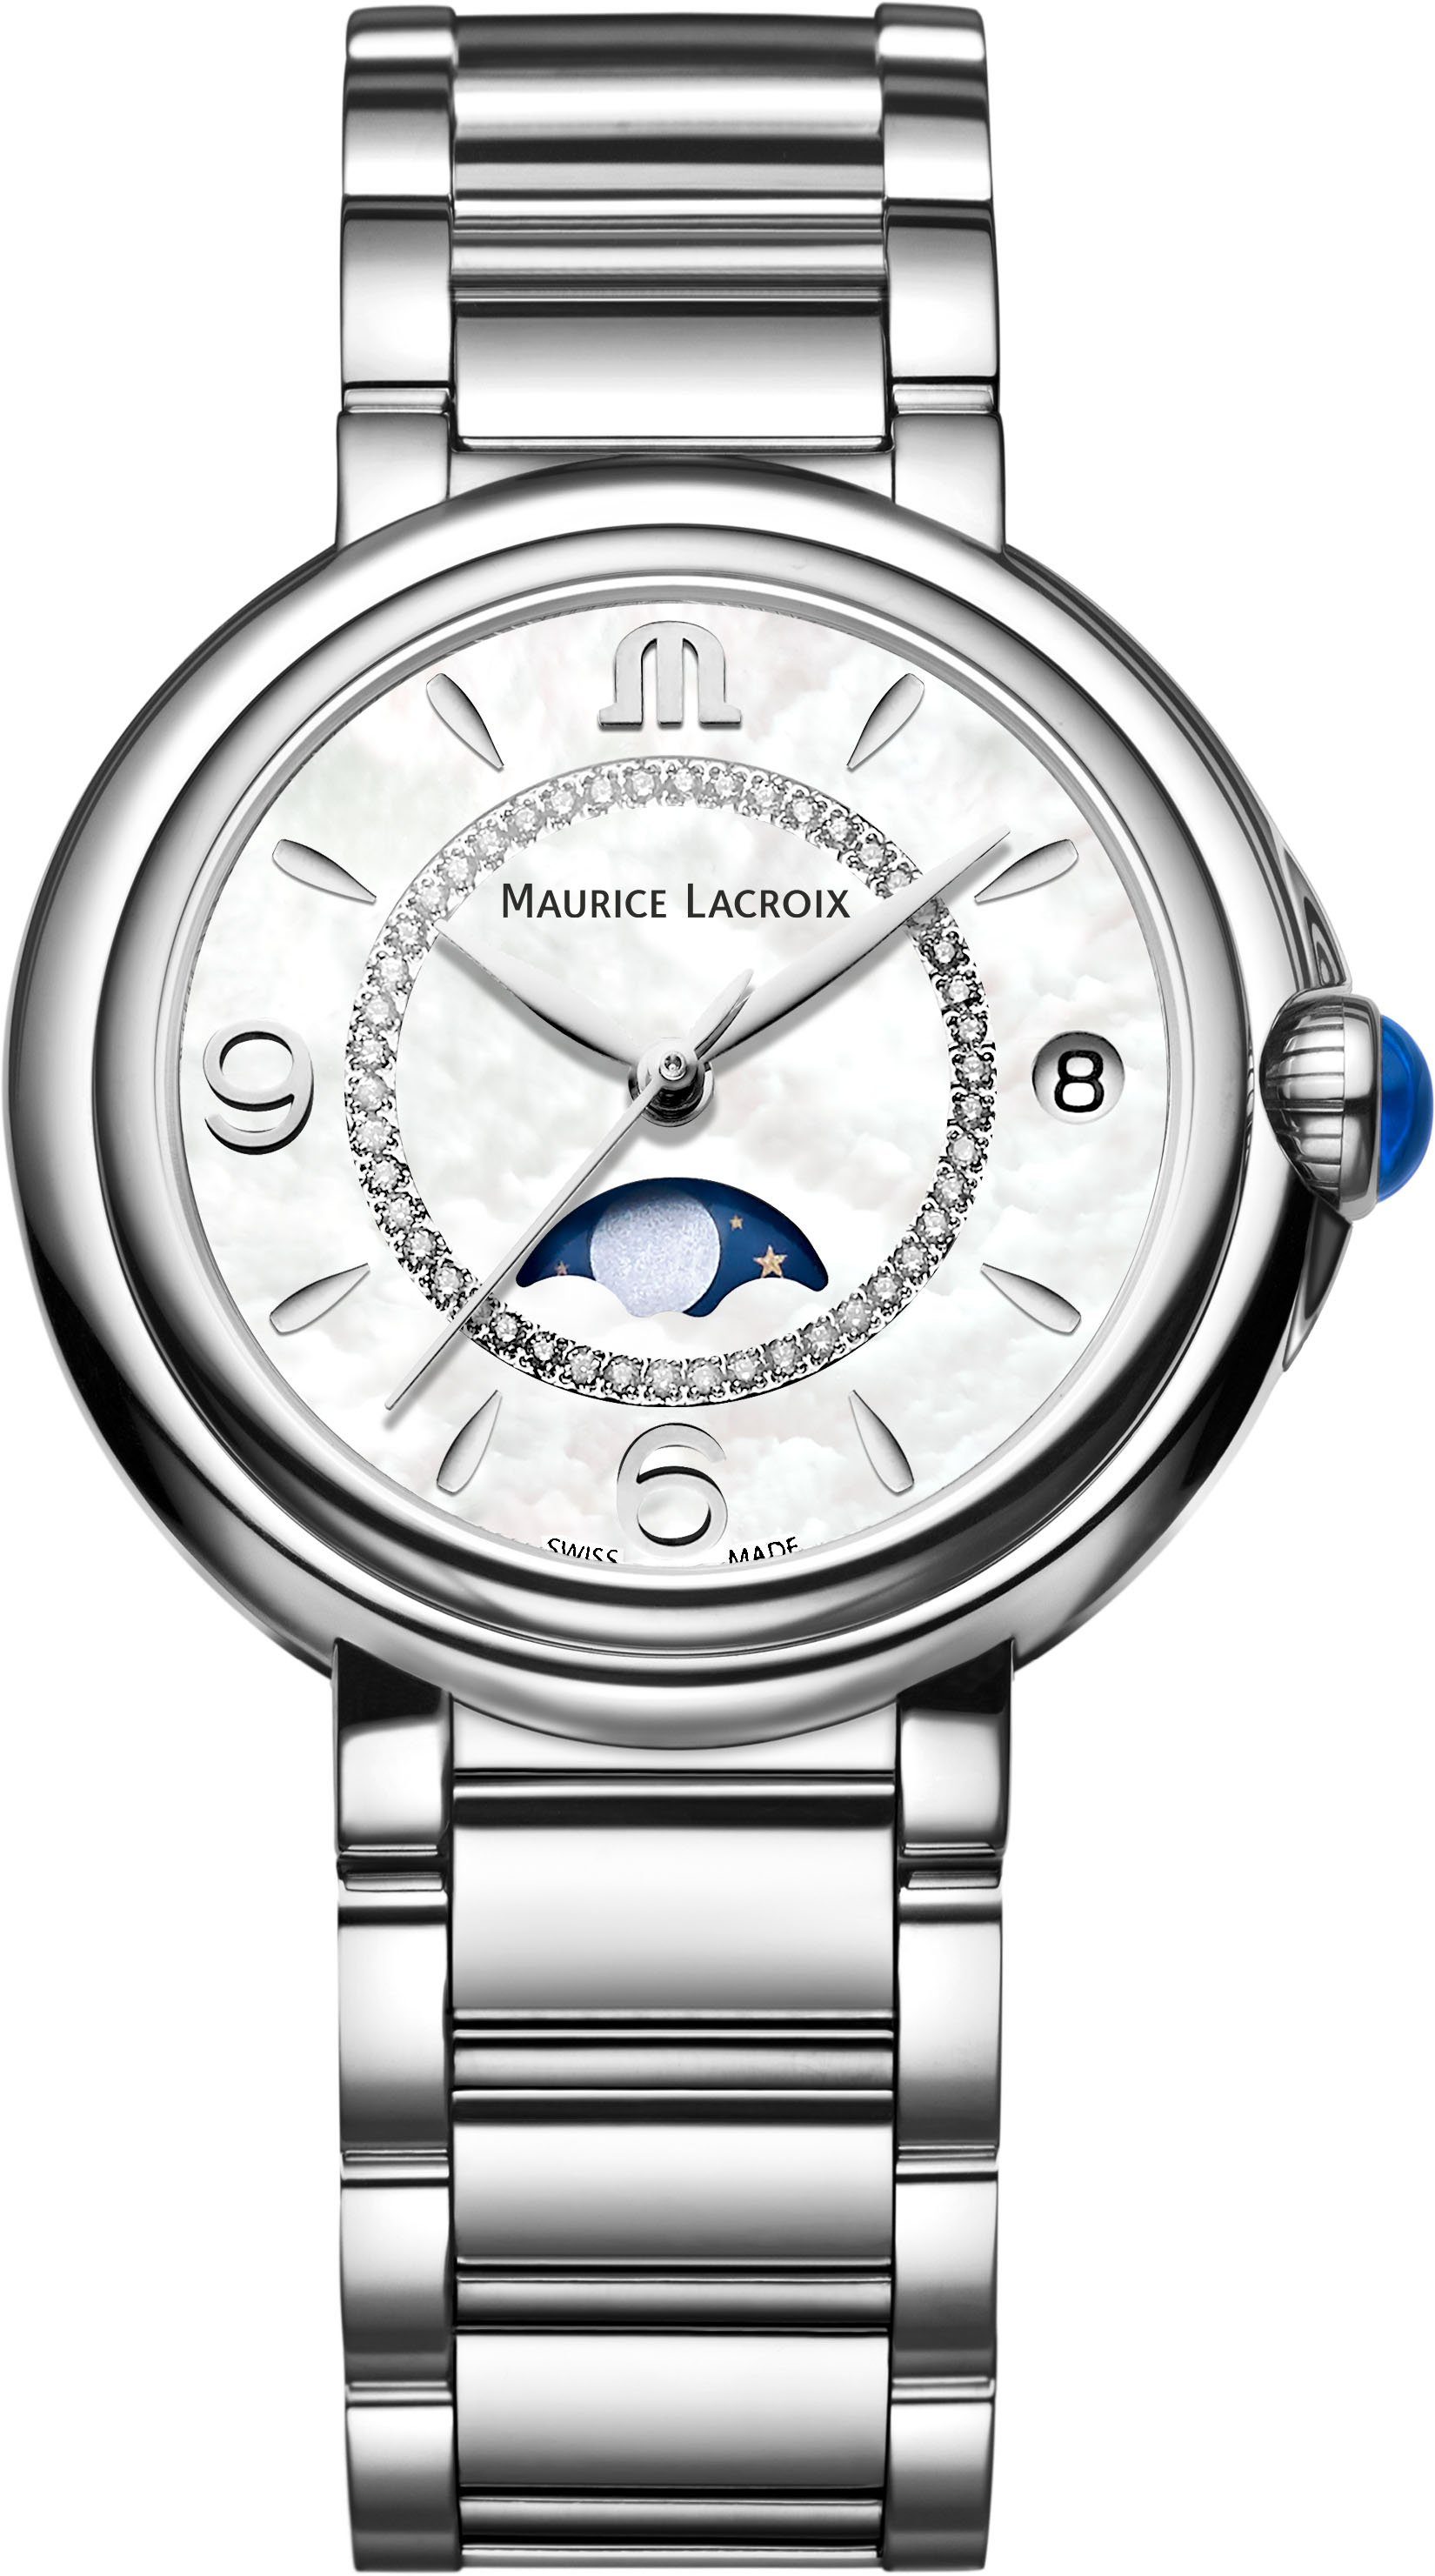 MAURICE LACROIX Schweizer Uhr FIABA MOONPHASE, FA1084-SS002-170-1, Diamanten, Mondphase